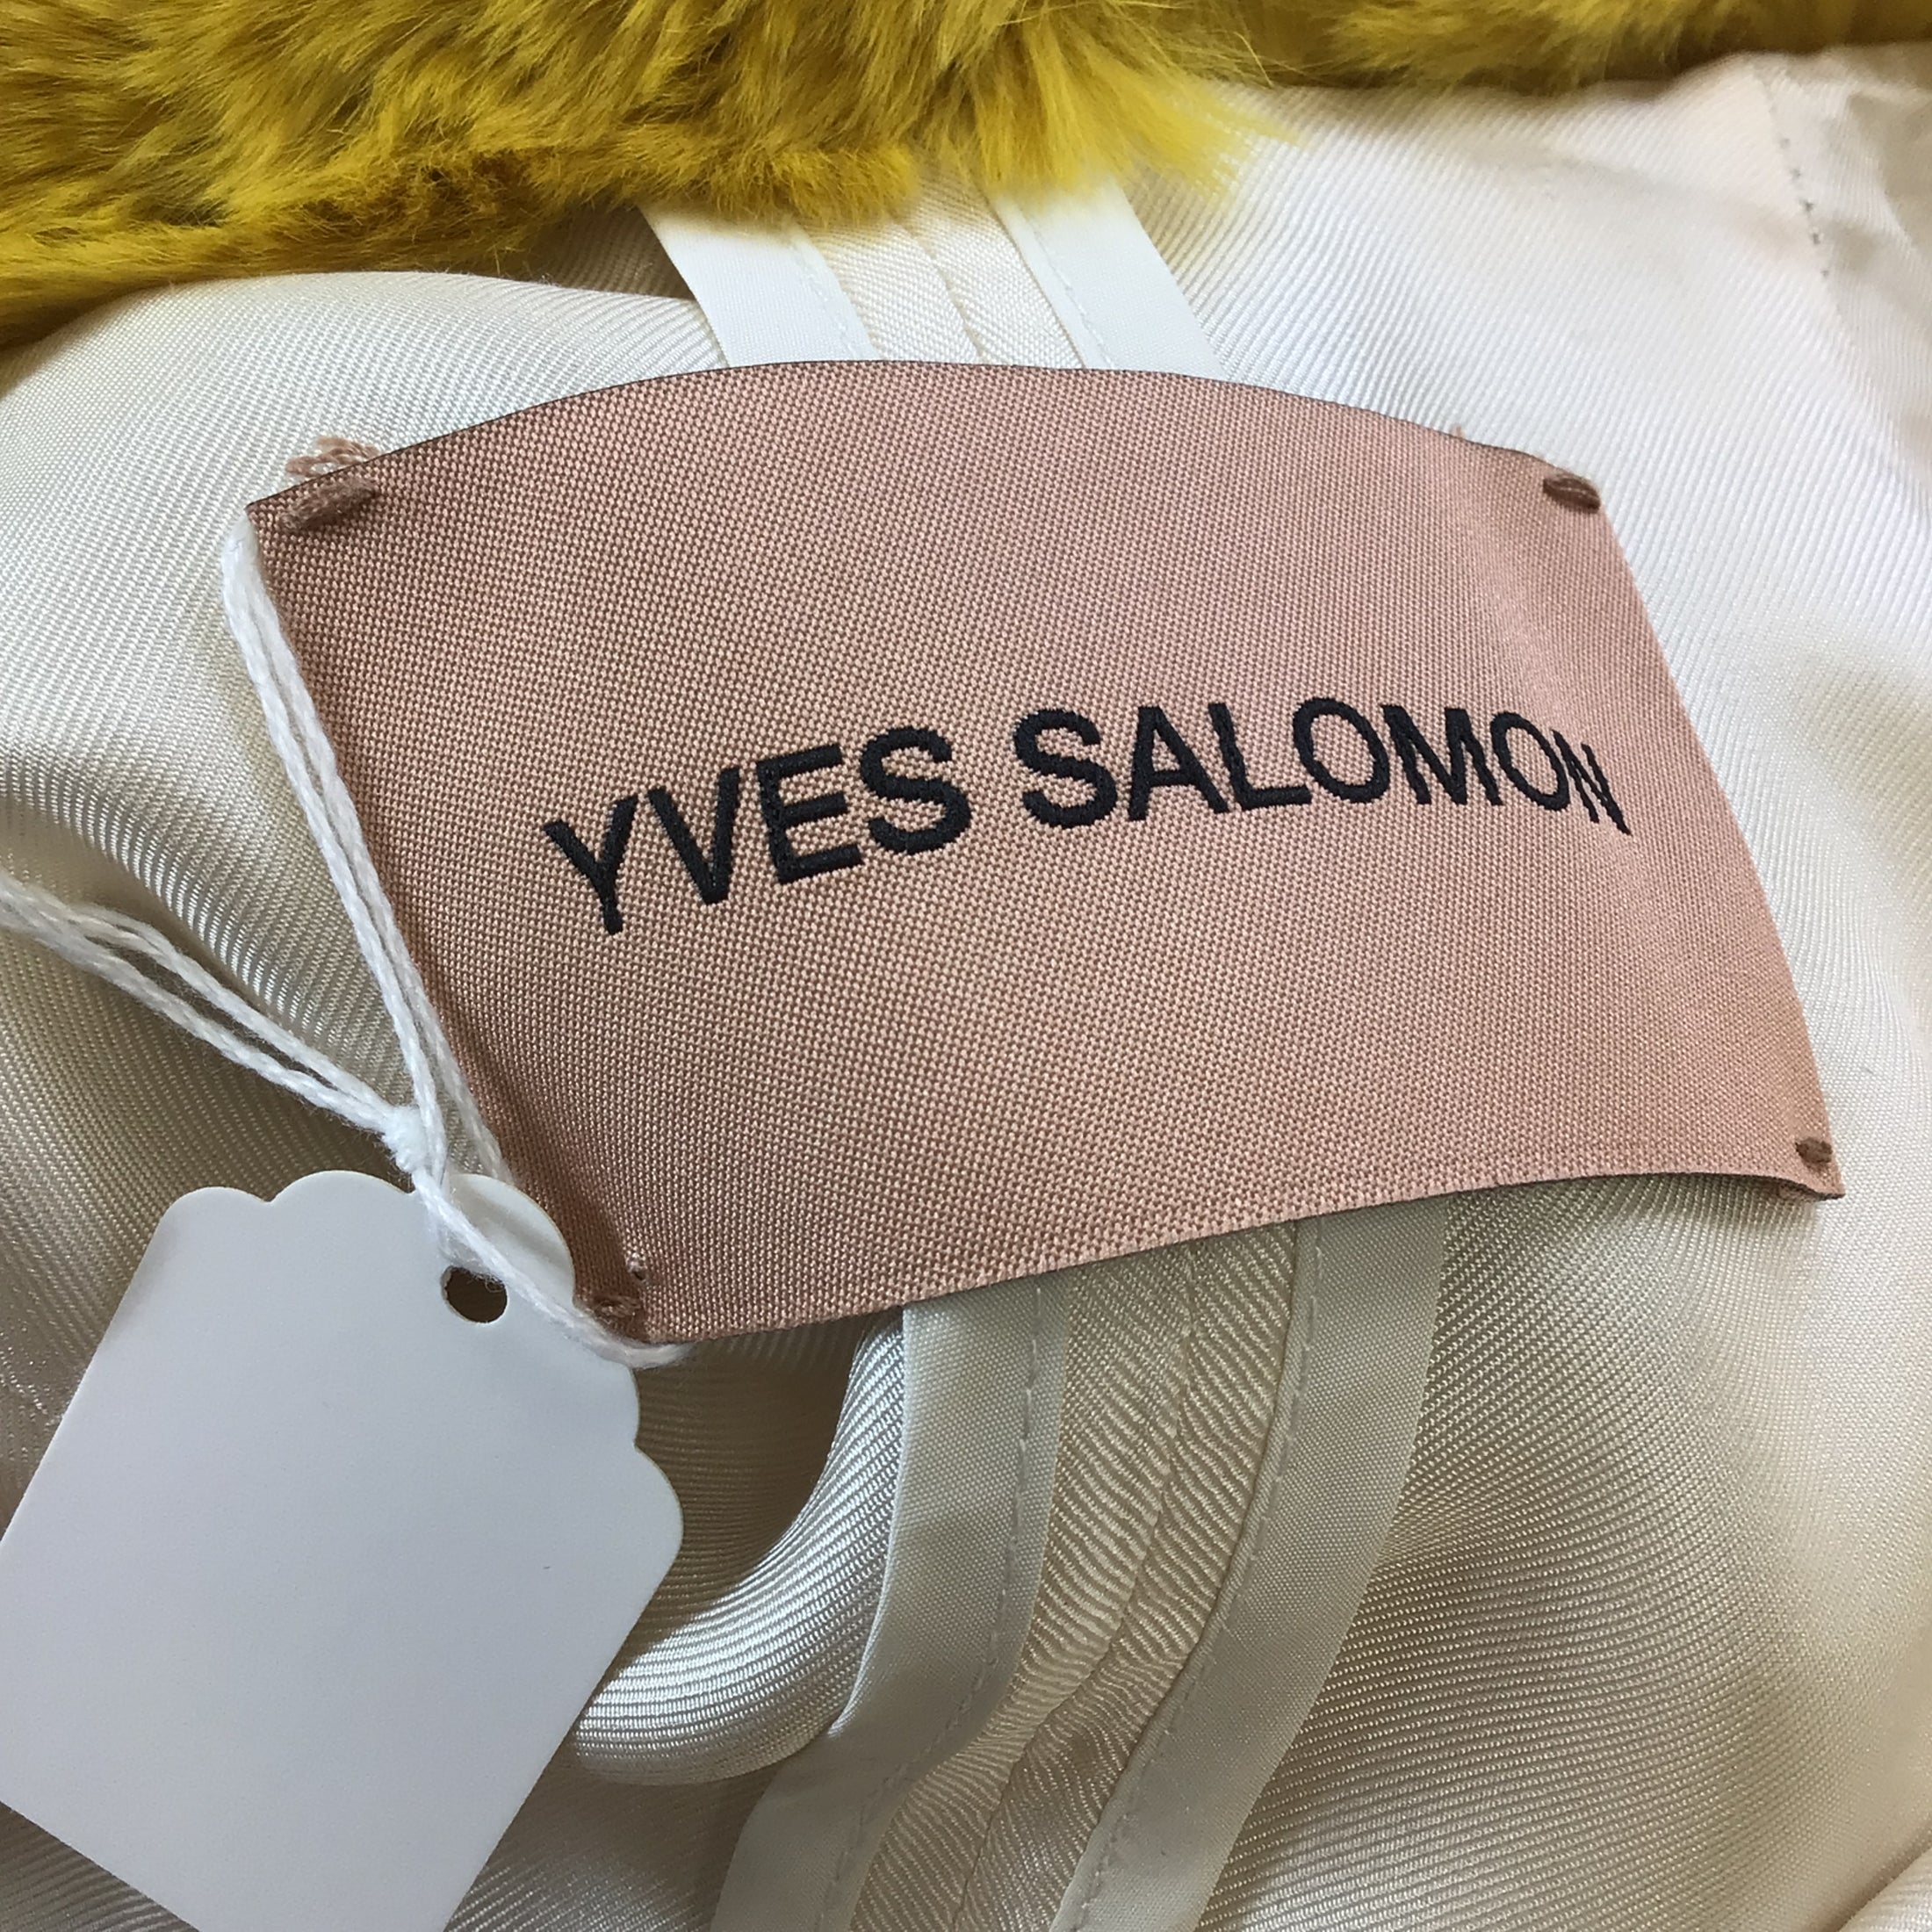 Yves Salomon Yellow Single Breasted Rex Rabbit Fur Coat